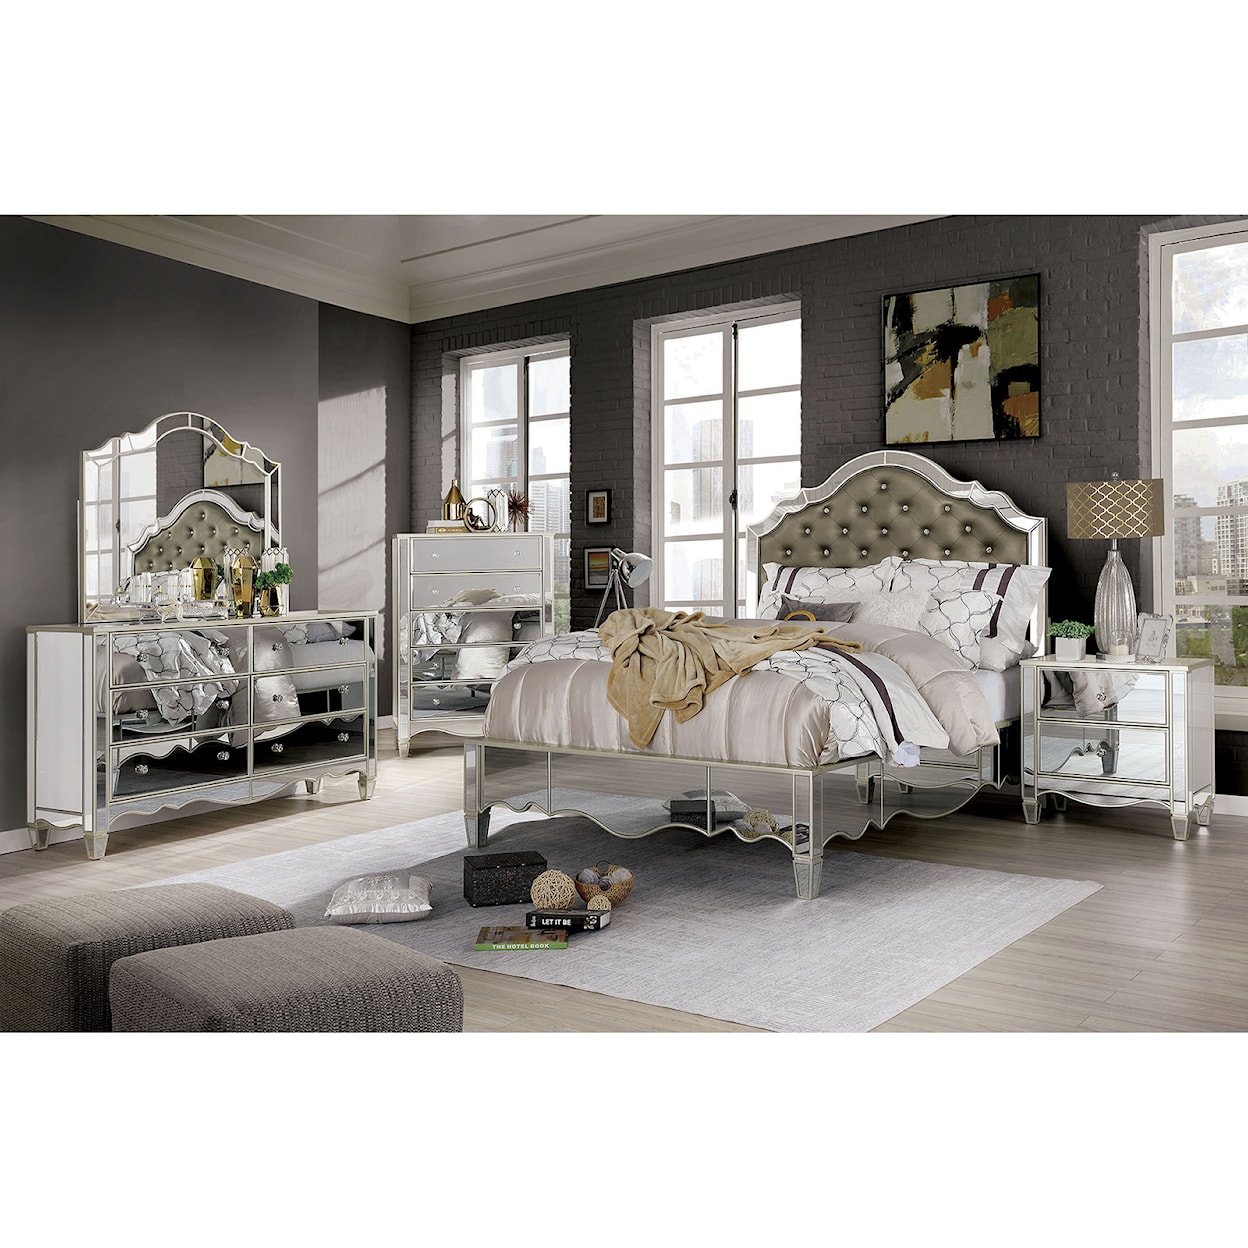 Furniture of America Eliora 5-Piece Bedroom Set